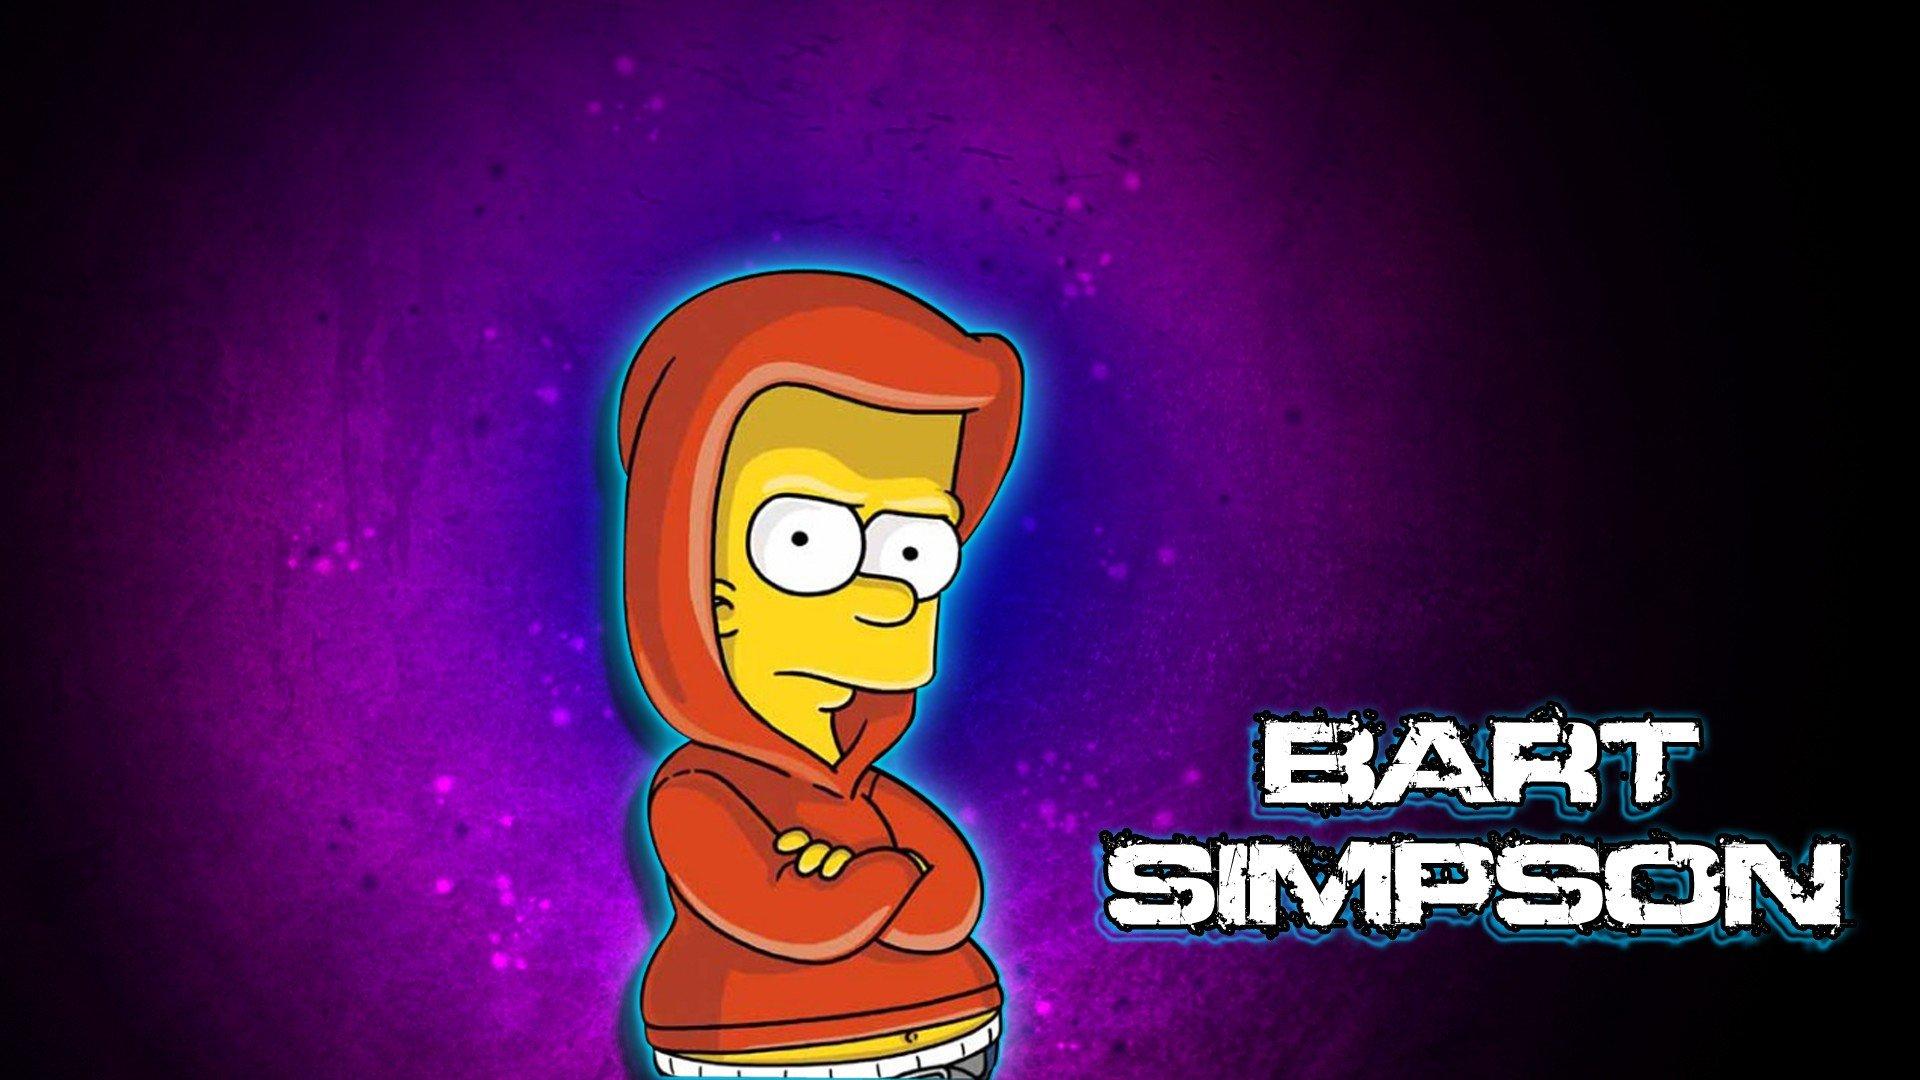 Bart simpson wallpaper by EddayA  Download on ZEDGE  94f2